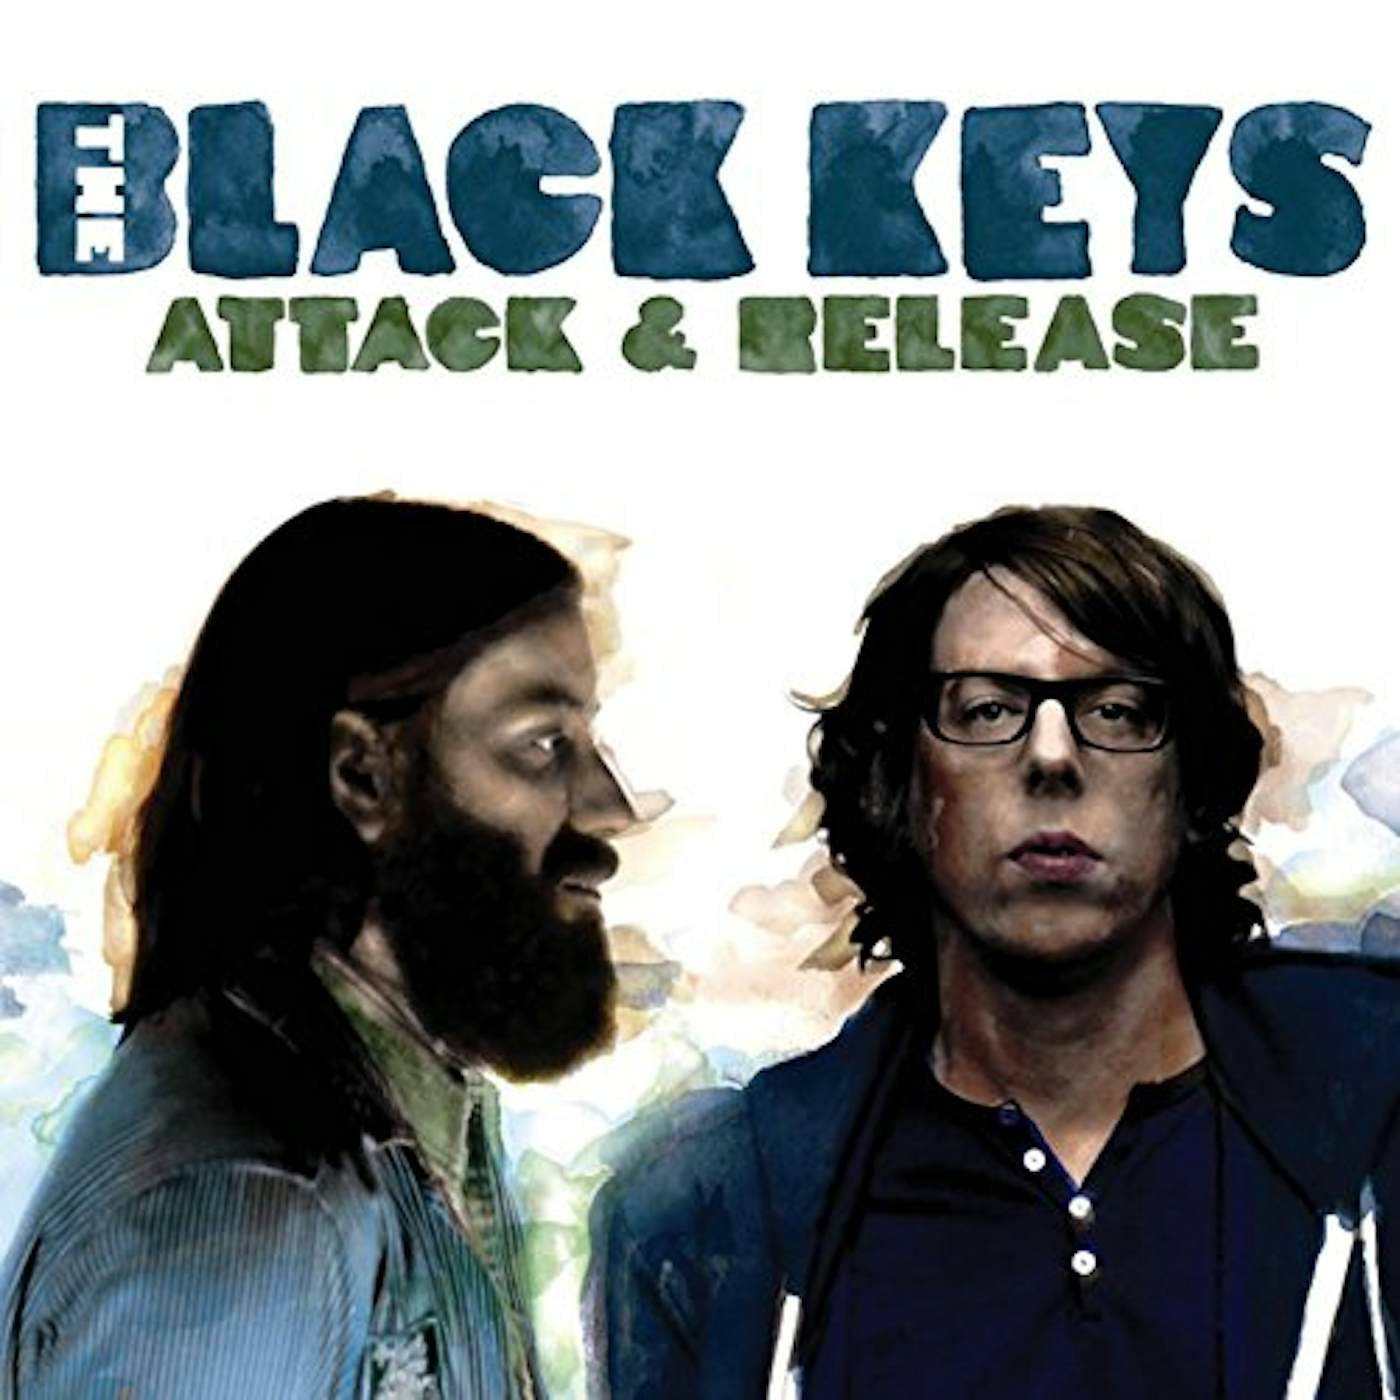 The Black Keys Attack & Release Vinyl Record